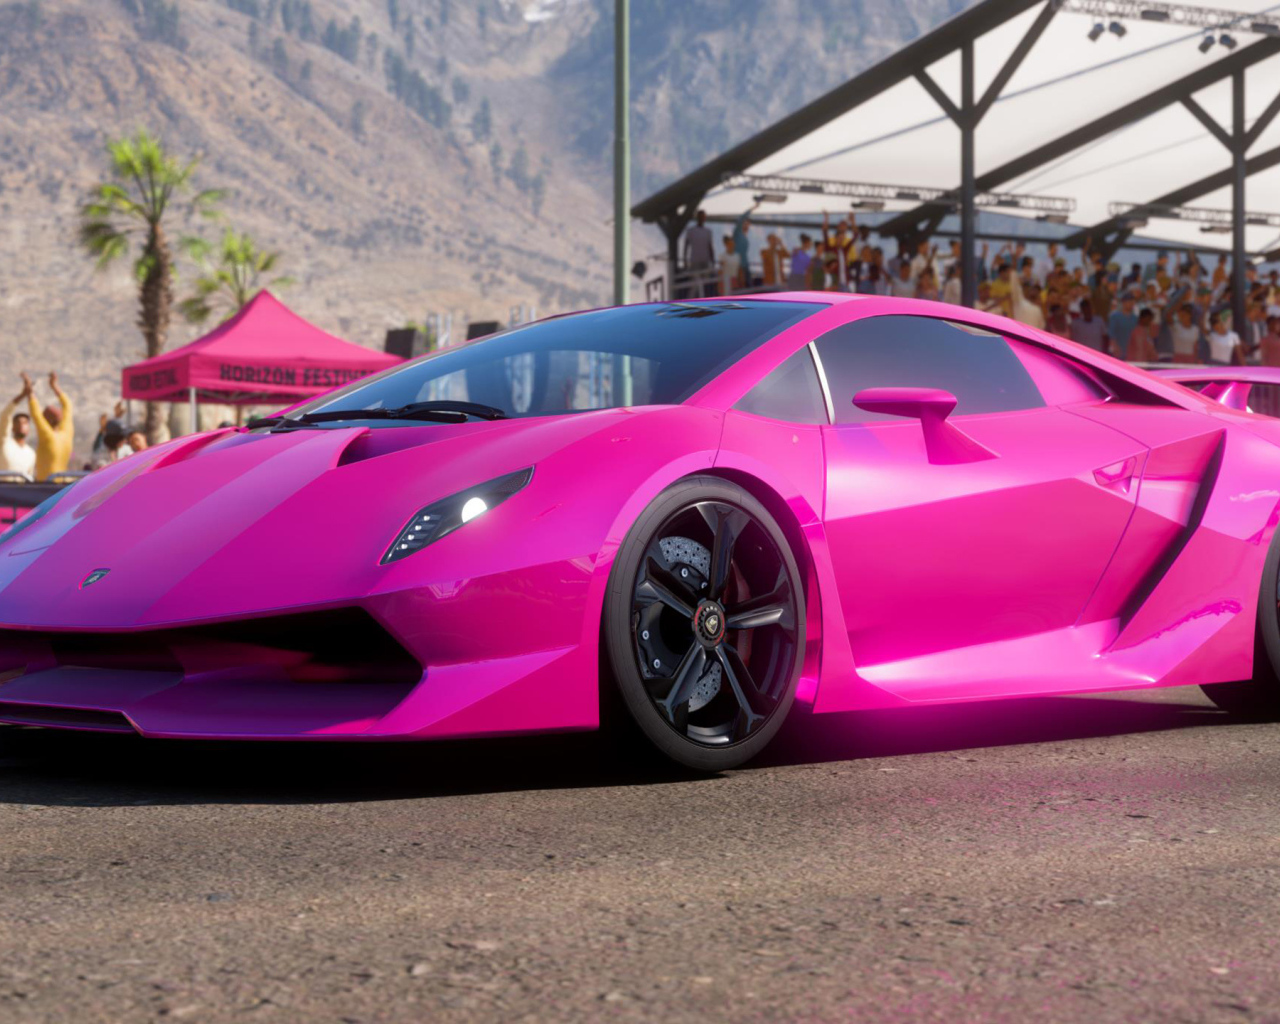 Розовый автомобиль Lamborghini Sesto Elemento